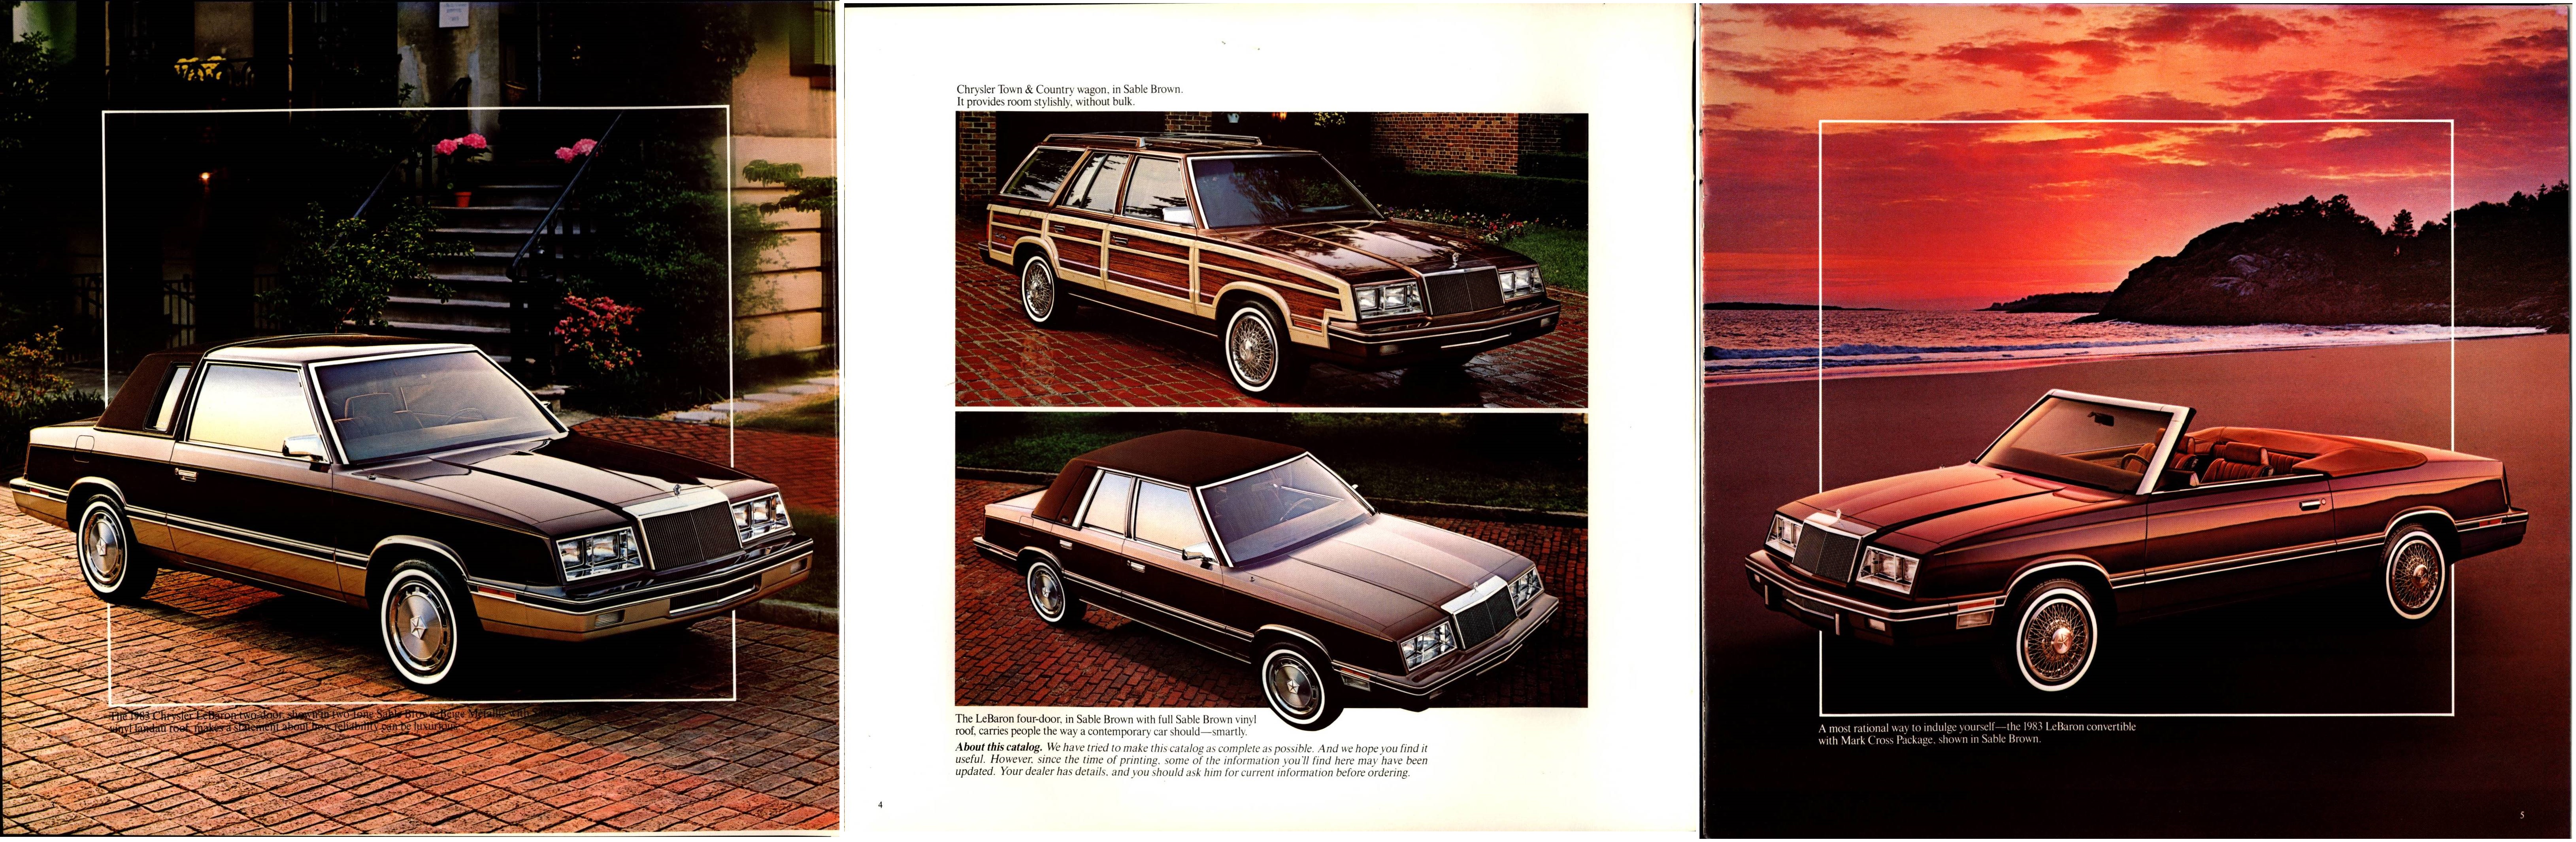 1983 Chrysler LeBaron Brochure 03-04-05